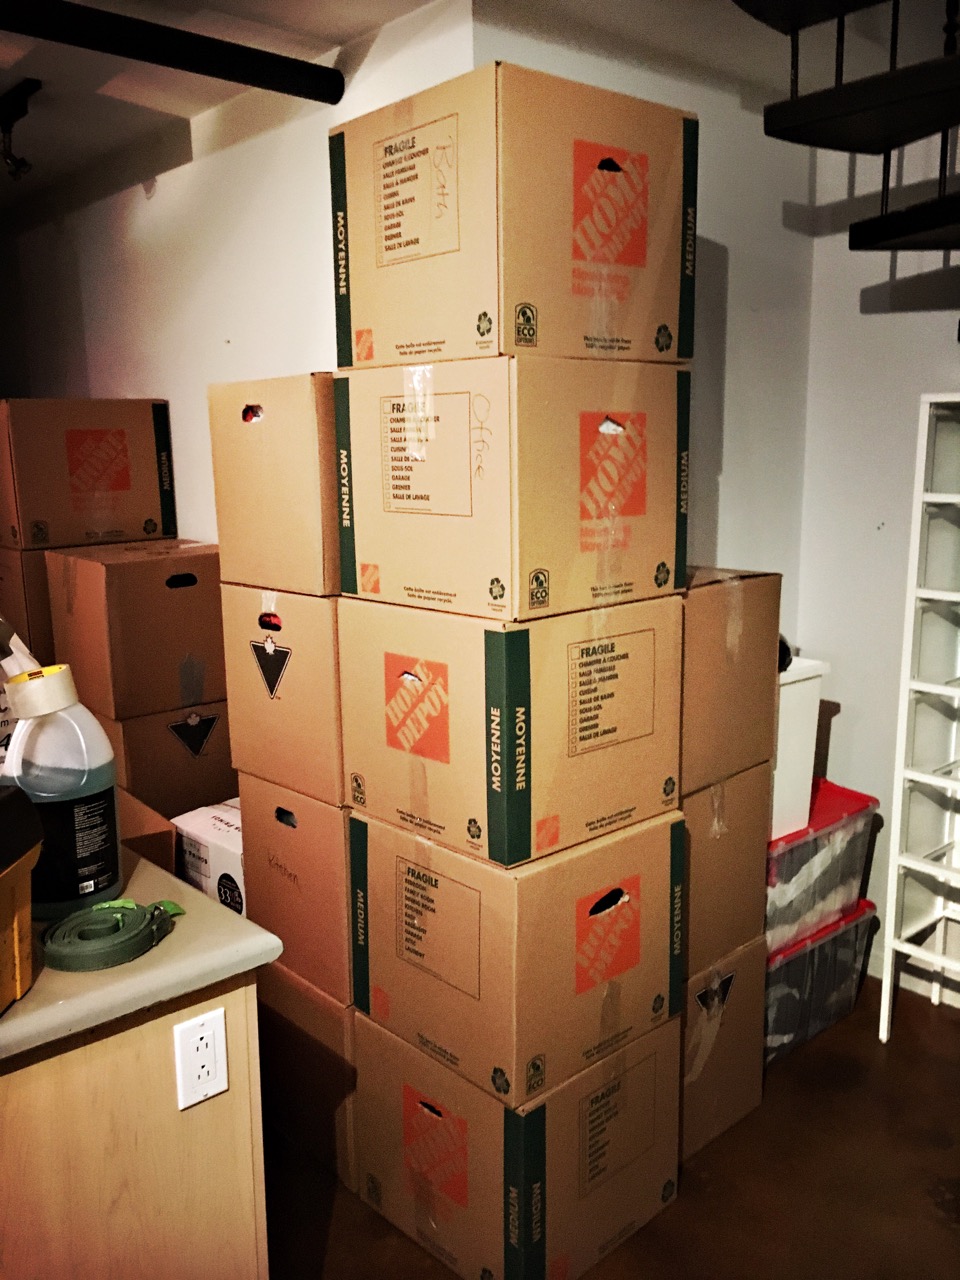 So viele Kisten